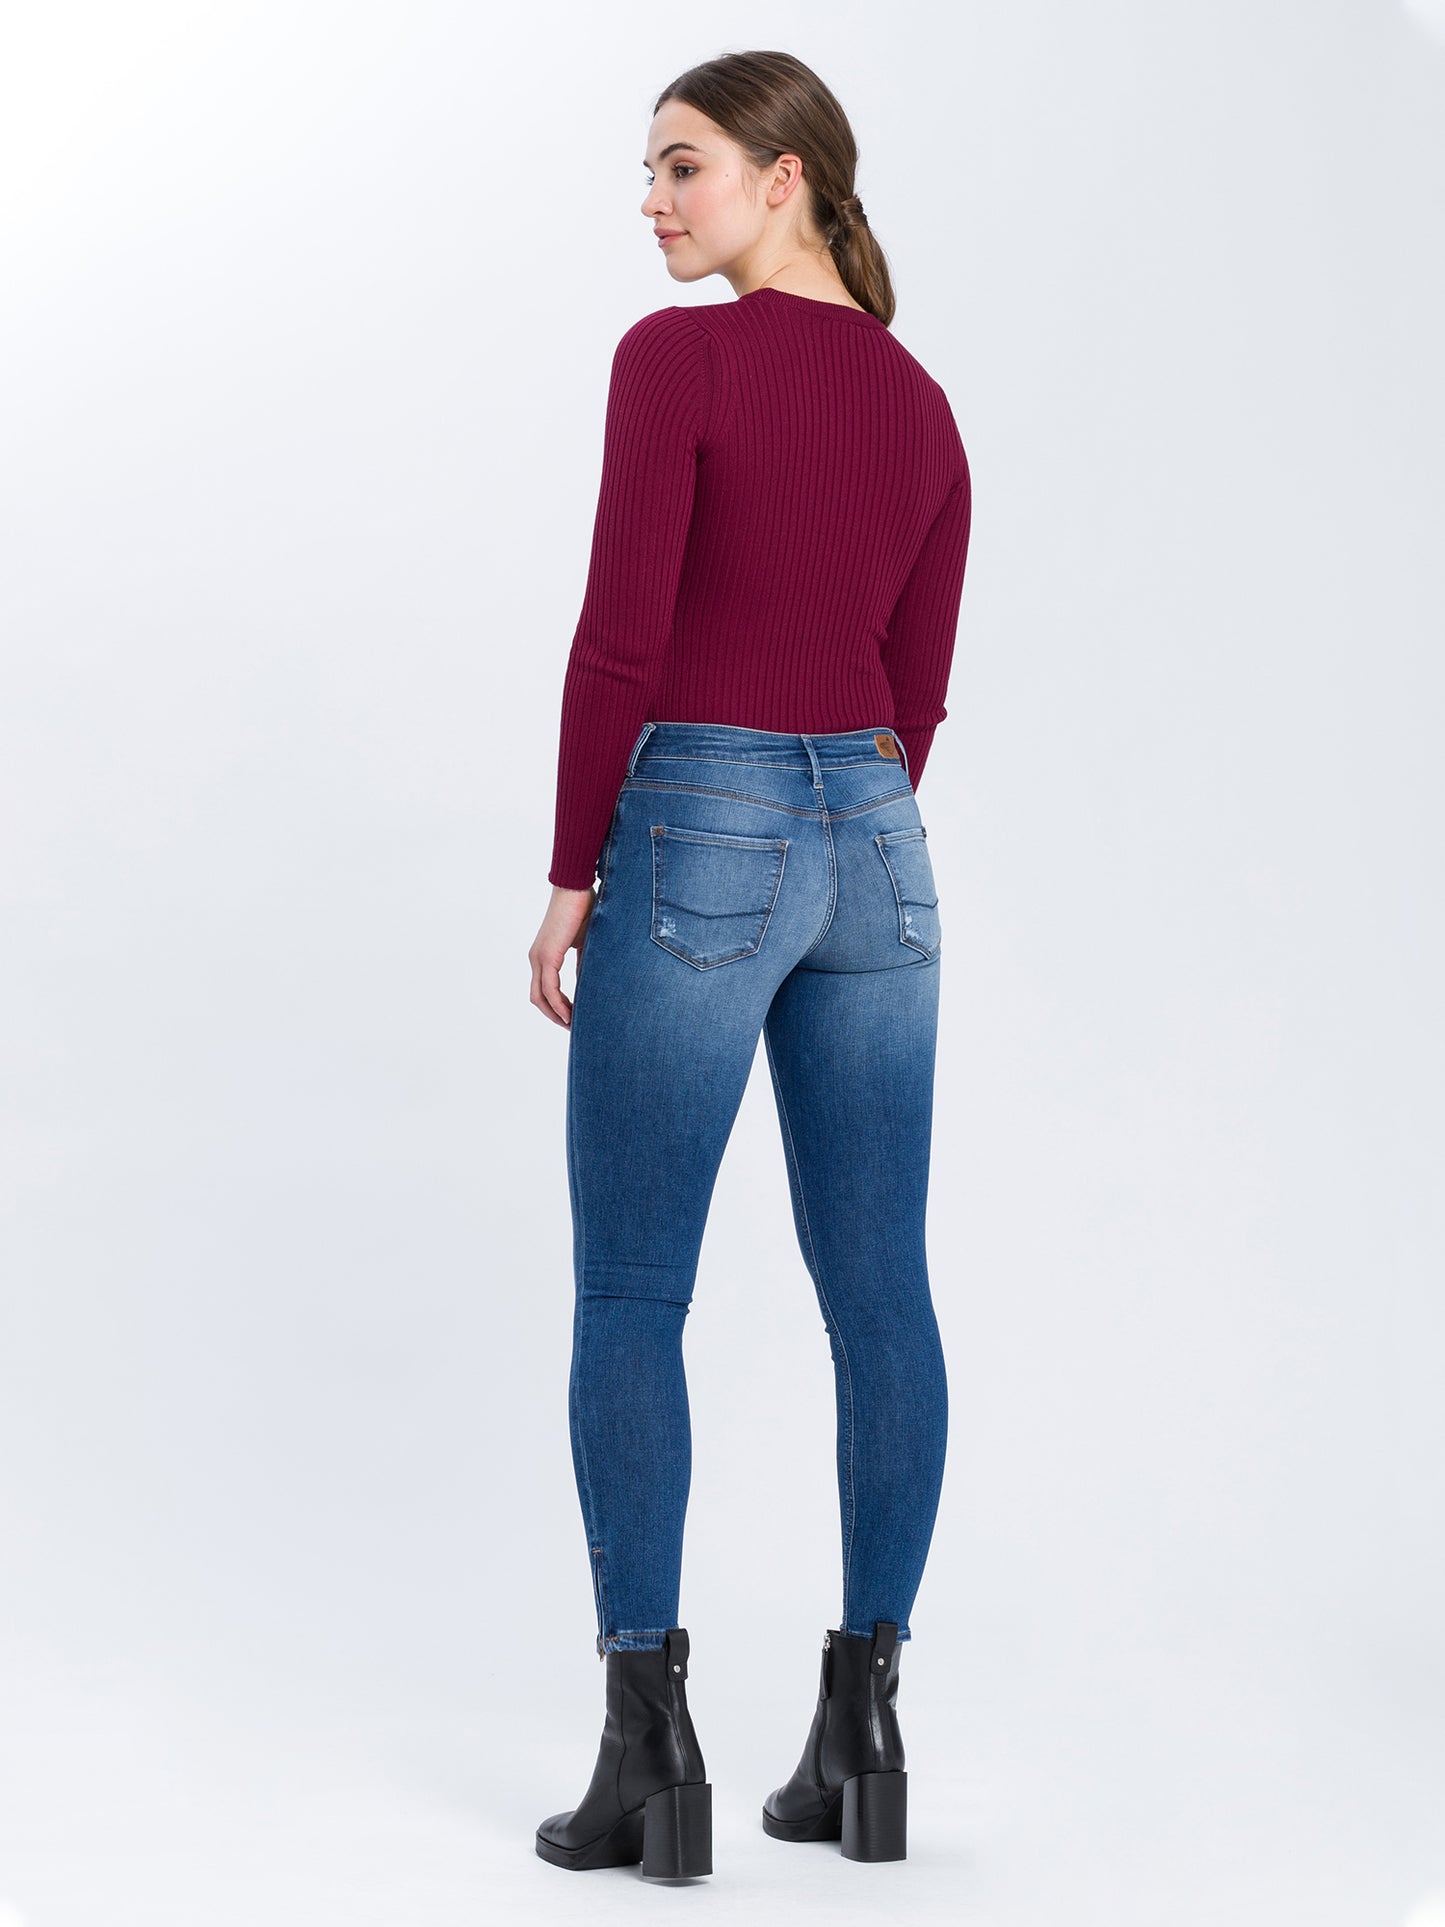 Giselle women's jeans super skinny fit mid waist ankle length medium blue